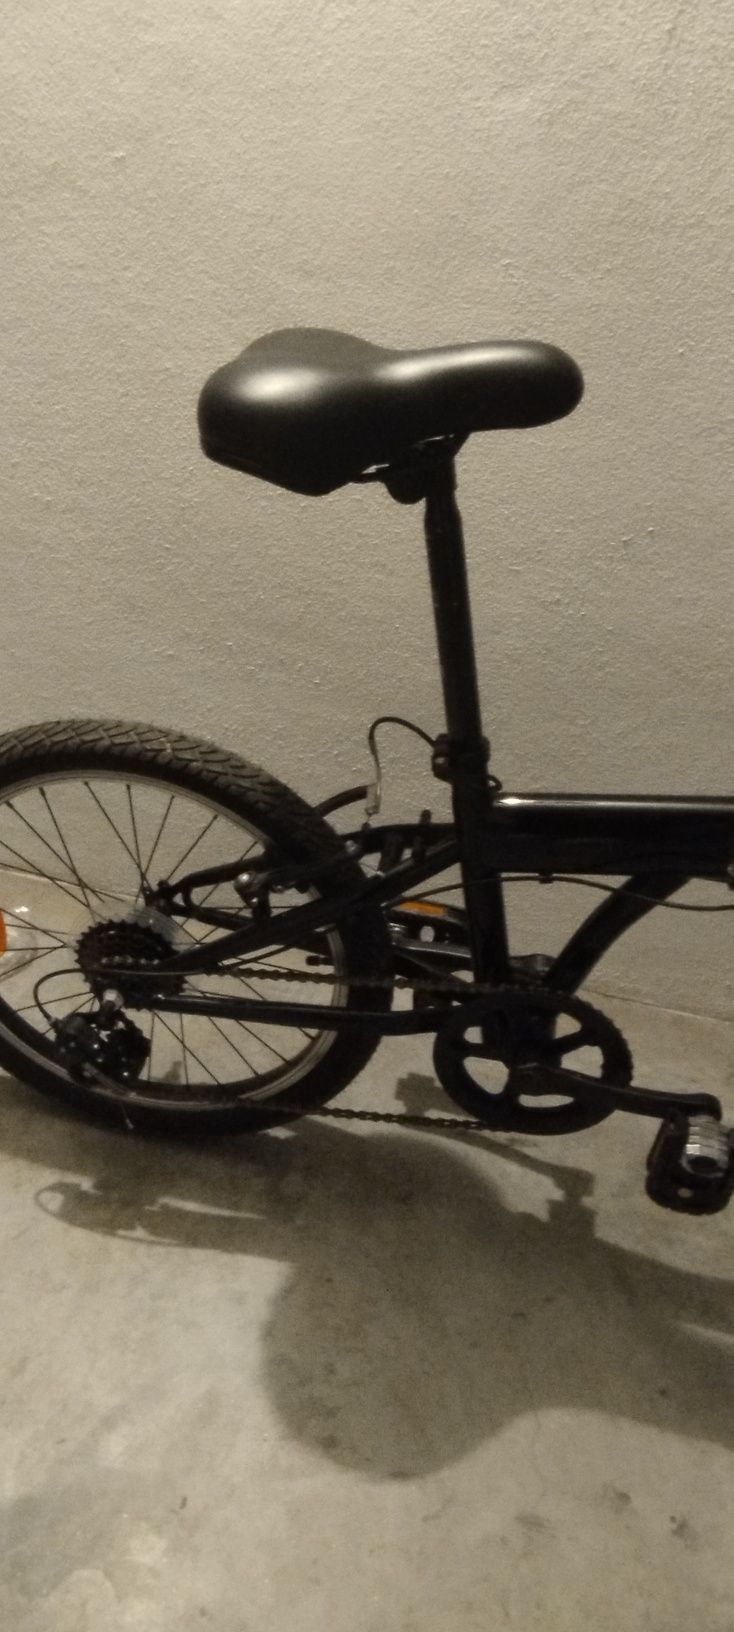 Bicicleta Mitical Crosstown Easy 10
https://bikemarket.pt › anuncio ›